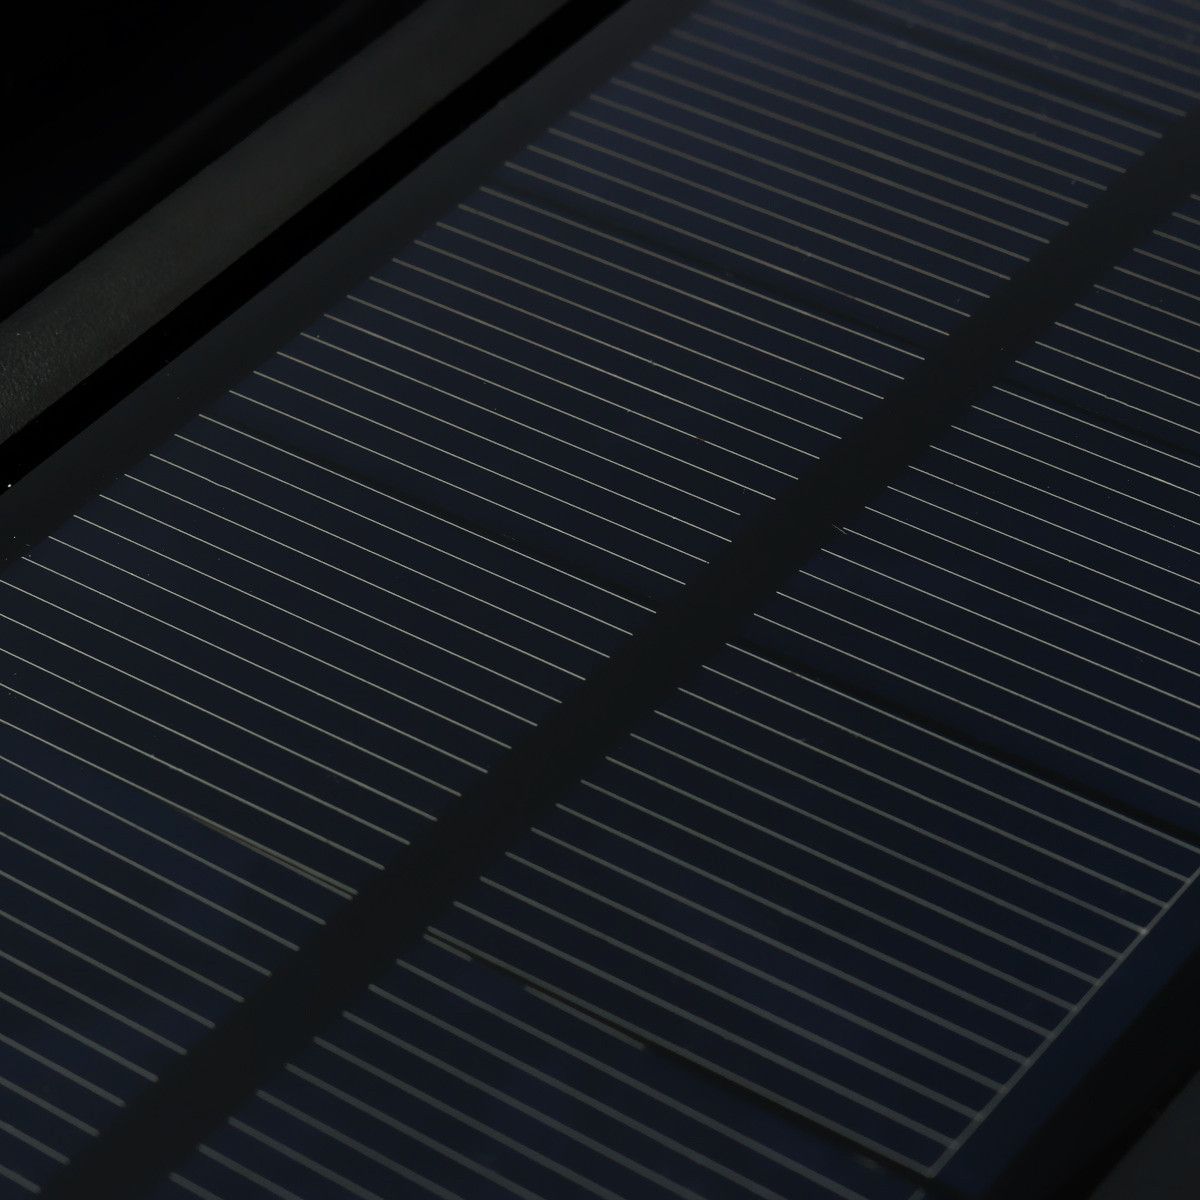 Solar-Power-Car-Exhaust-Fan-Double-Air-Outlet-Window-Cooling-Cooler-Rechargeable-Ventilation-Black-1371930